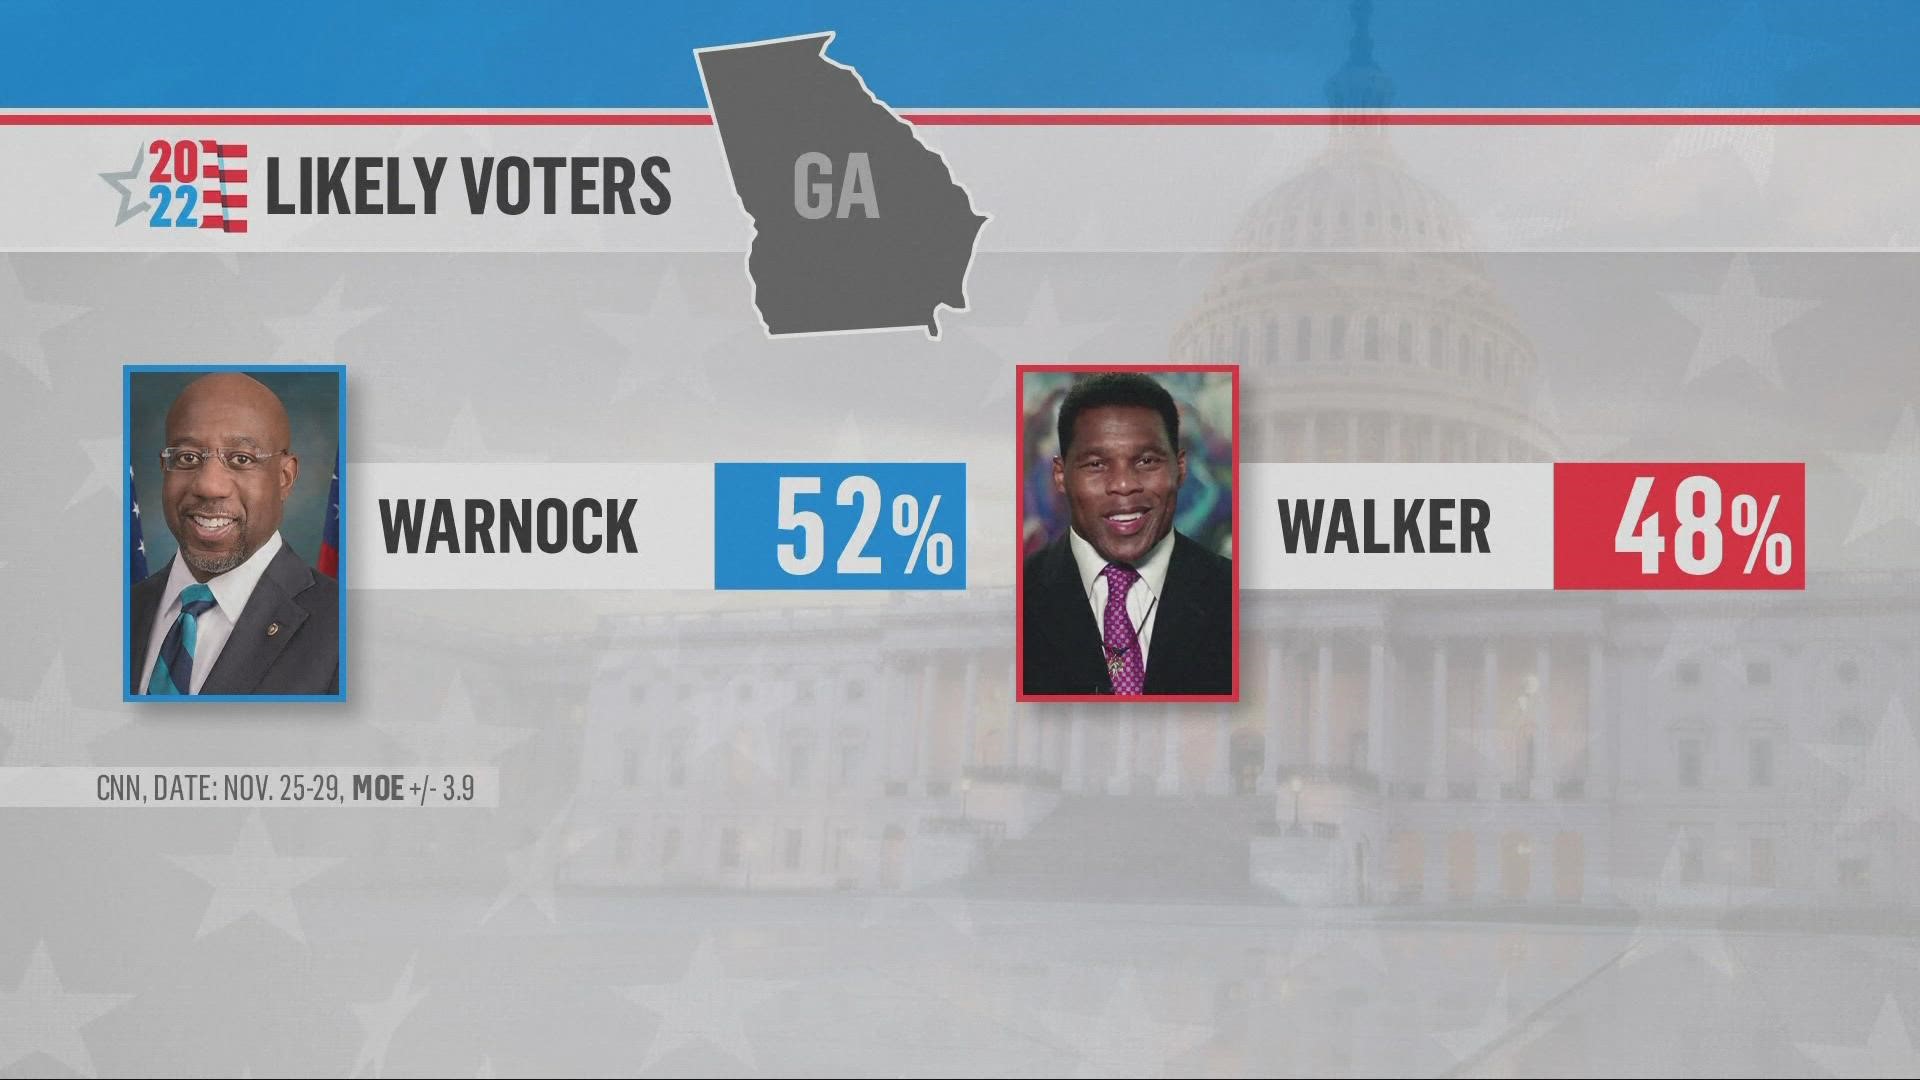 Voters will make their final decision in the Georgia Senate runoff between Raphael Warnock and Herschel Walker.